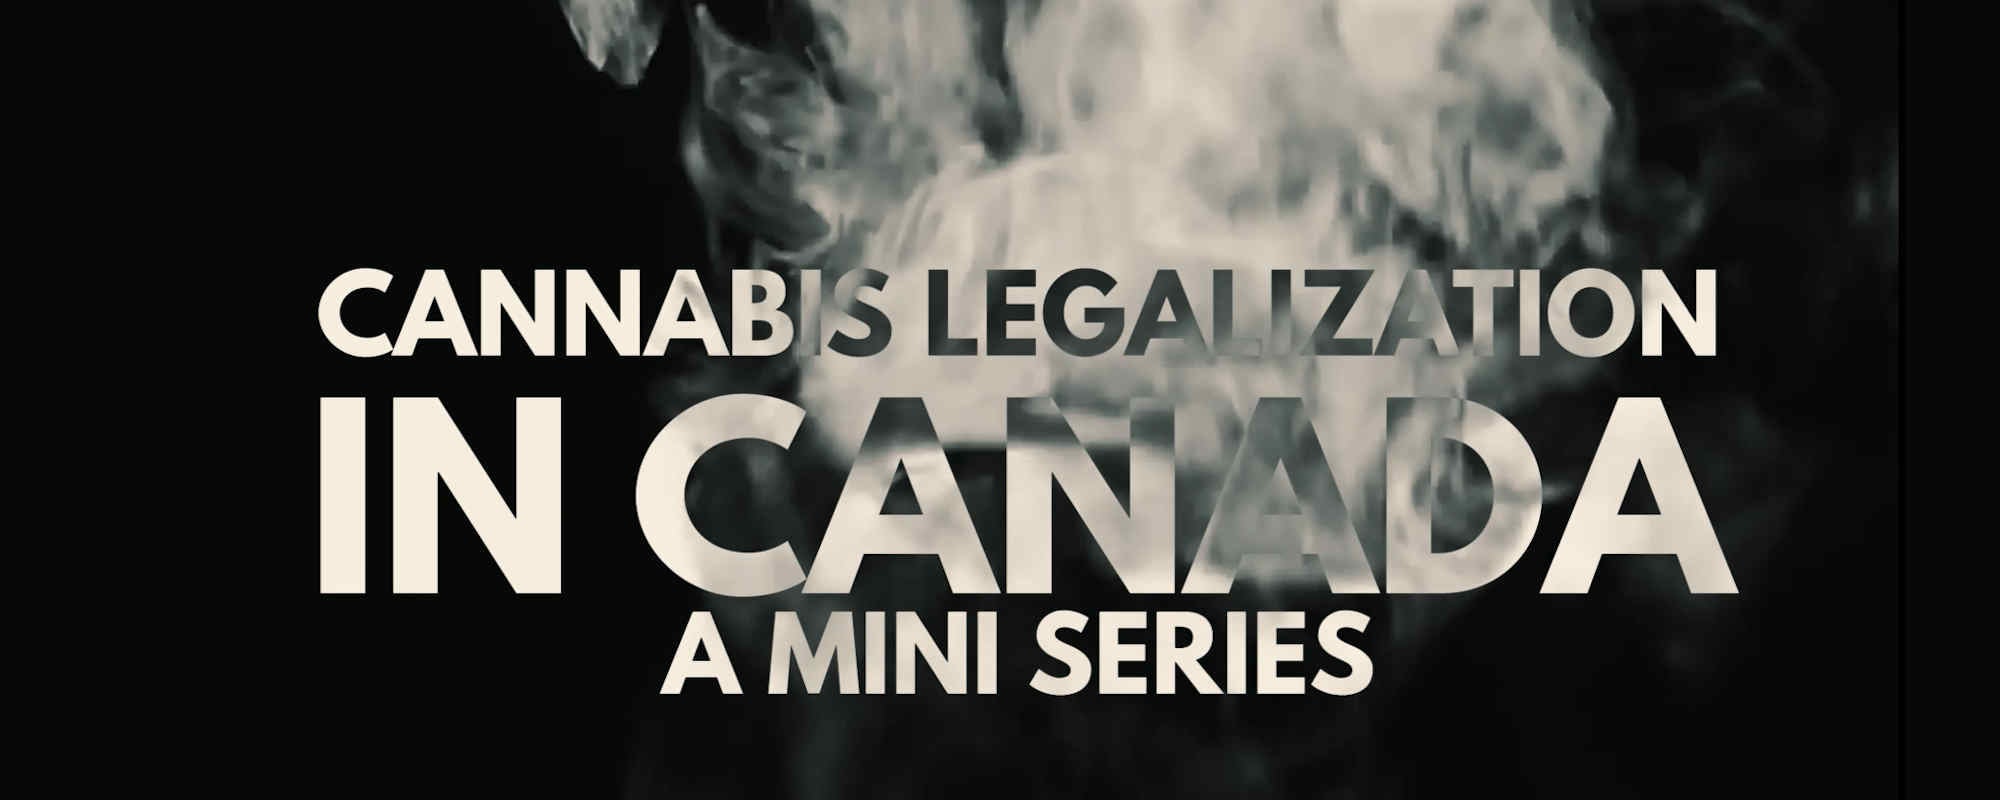 Cannabis legalization in Canada image